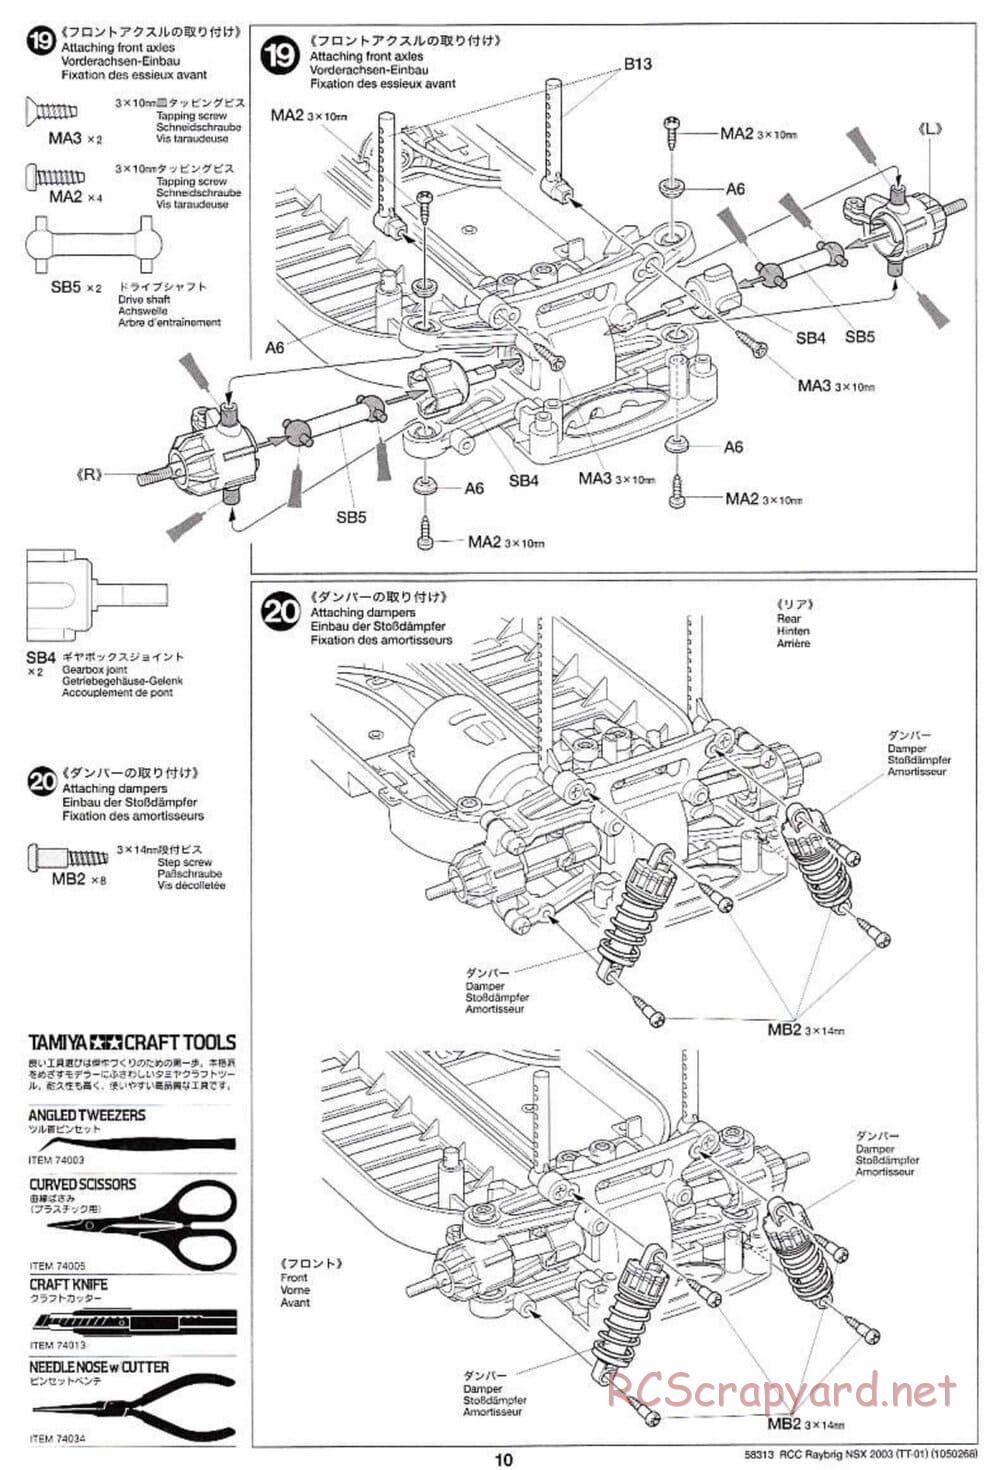 Tamiya - Raybrig NSX 2003 - TT-01 Chassis - Manual - Page 10